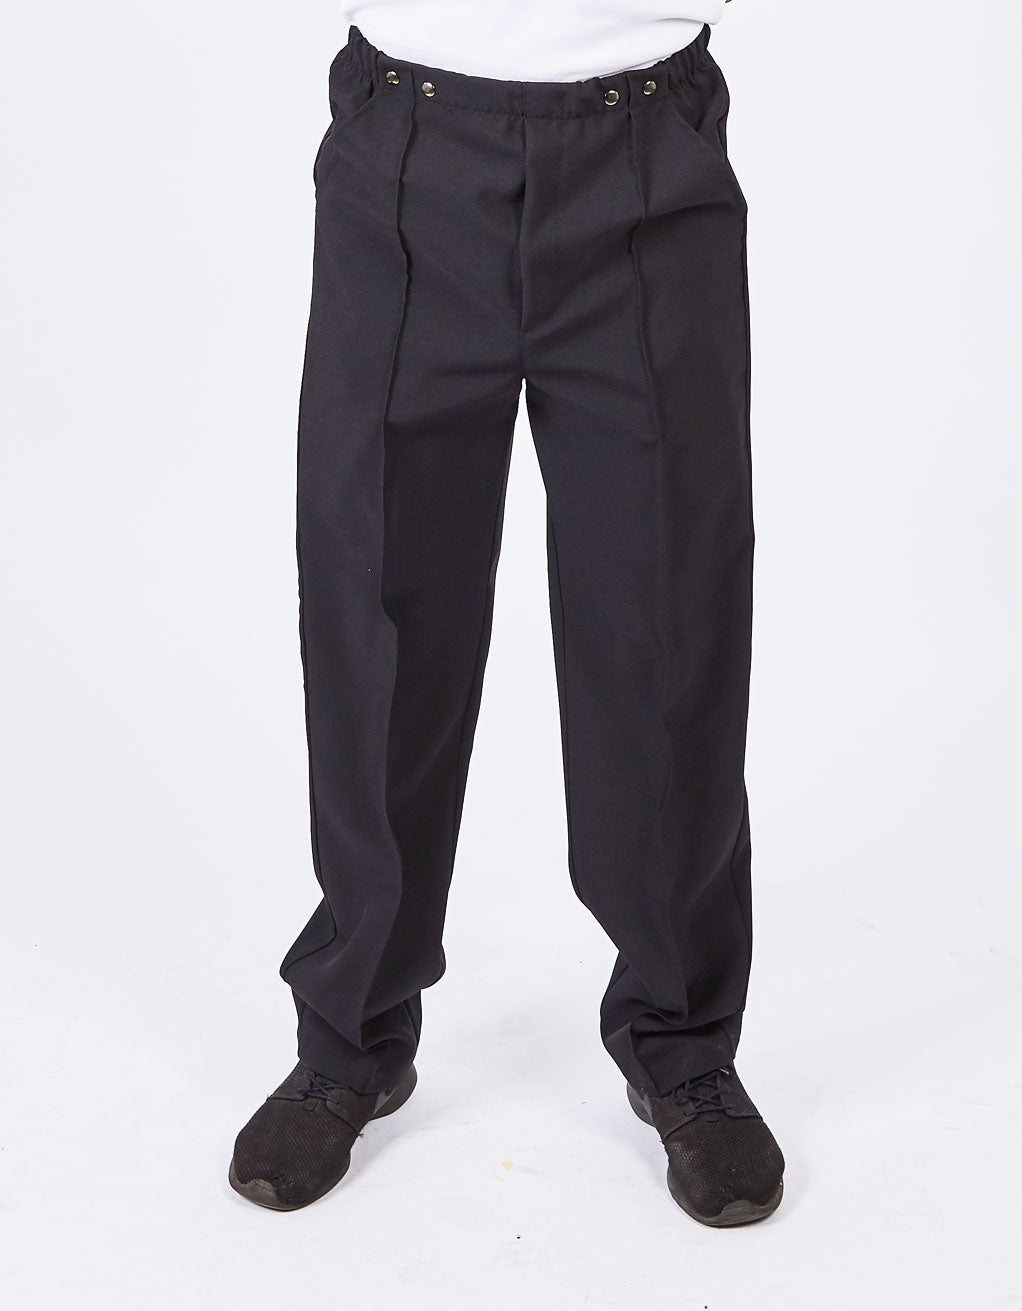 K1281 pantalons hommes Pradip Noir et gris